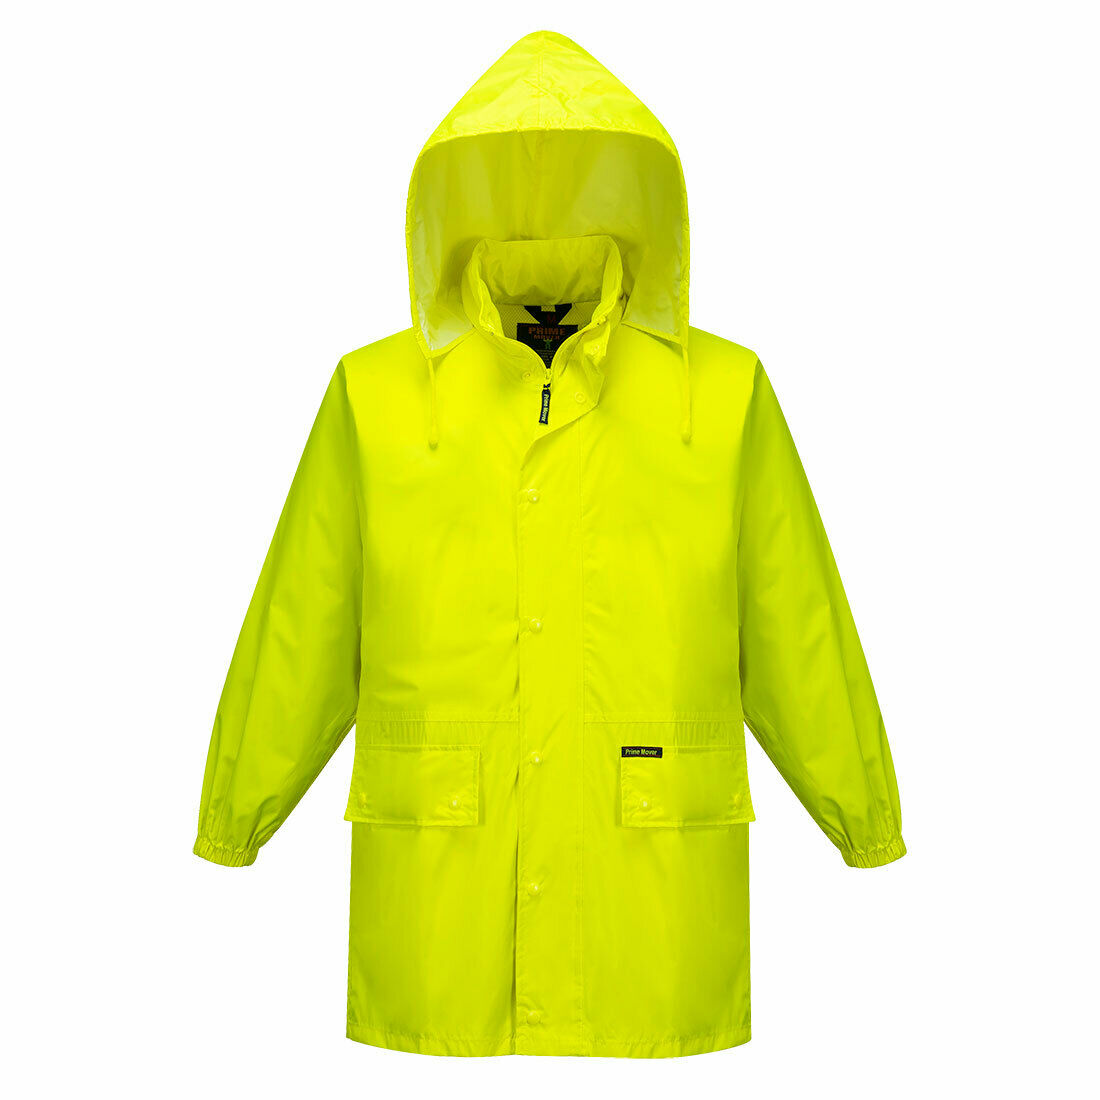 Portwest Mens Wet Weather Hi-Vis Polyester Waterproof Work Jacket Suit MS939-Collins Clothing Co